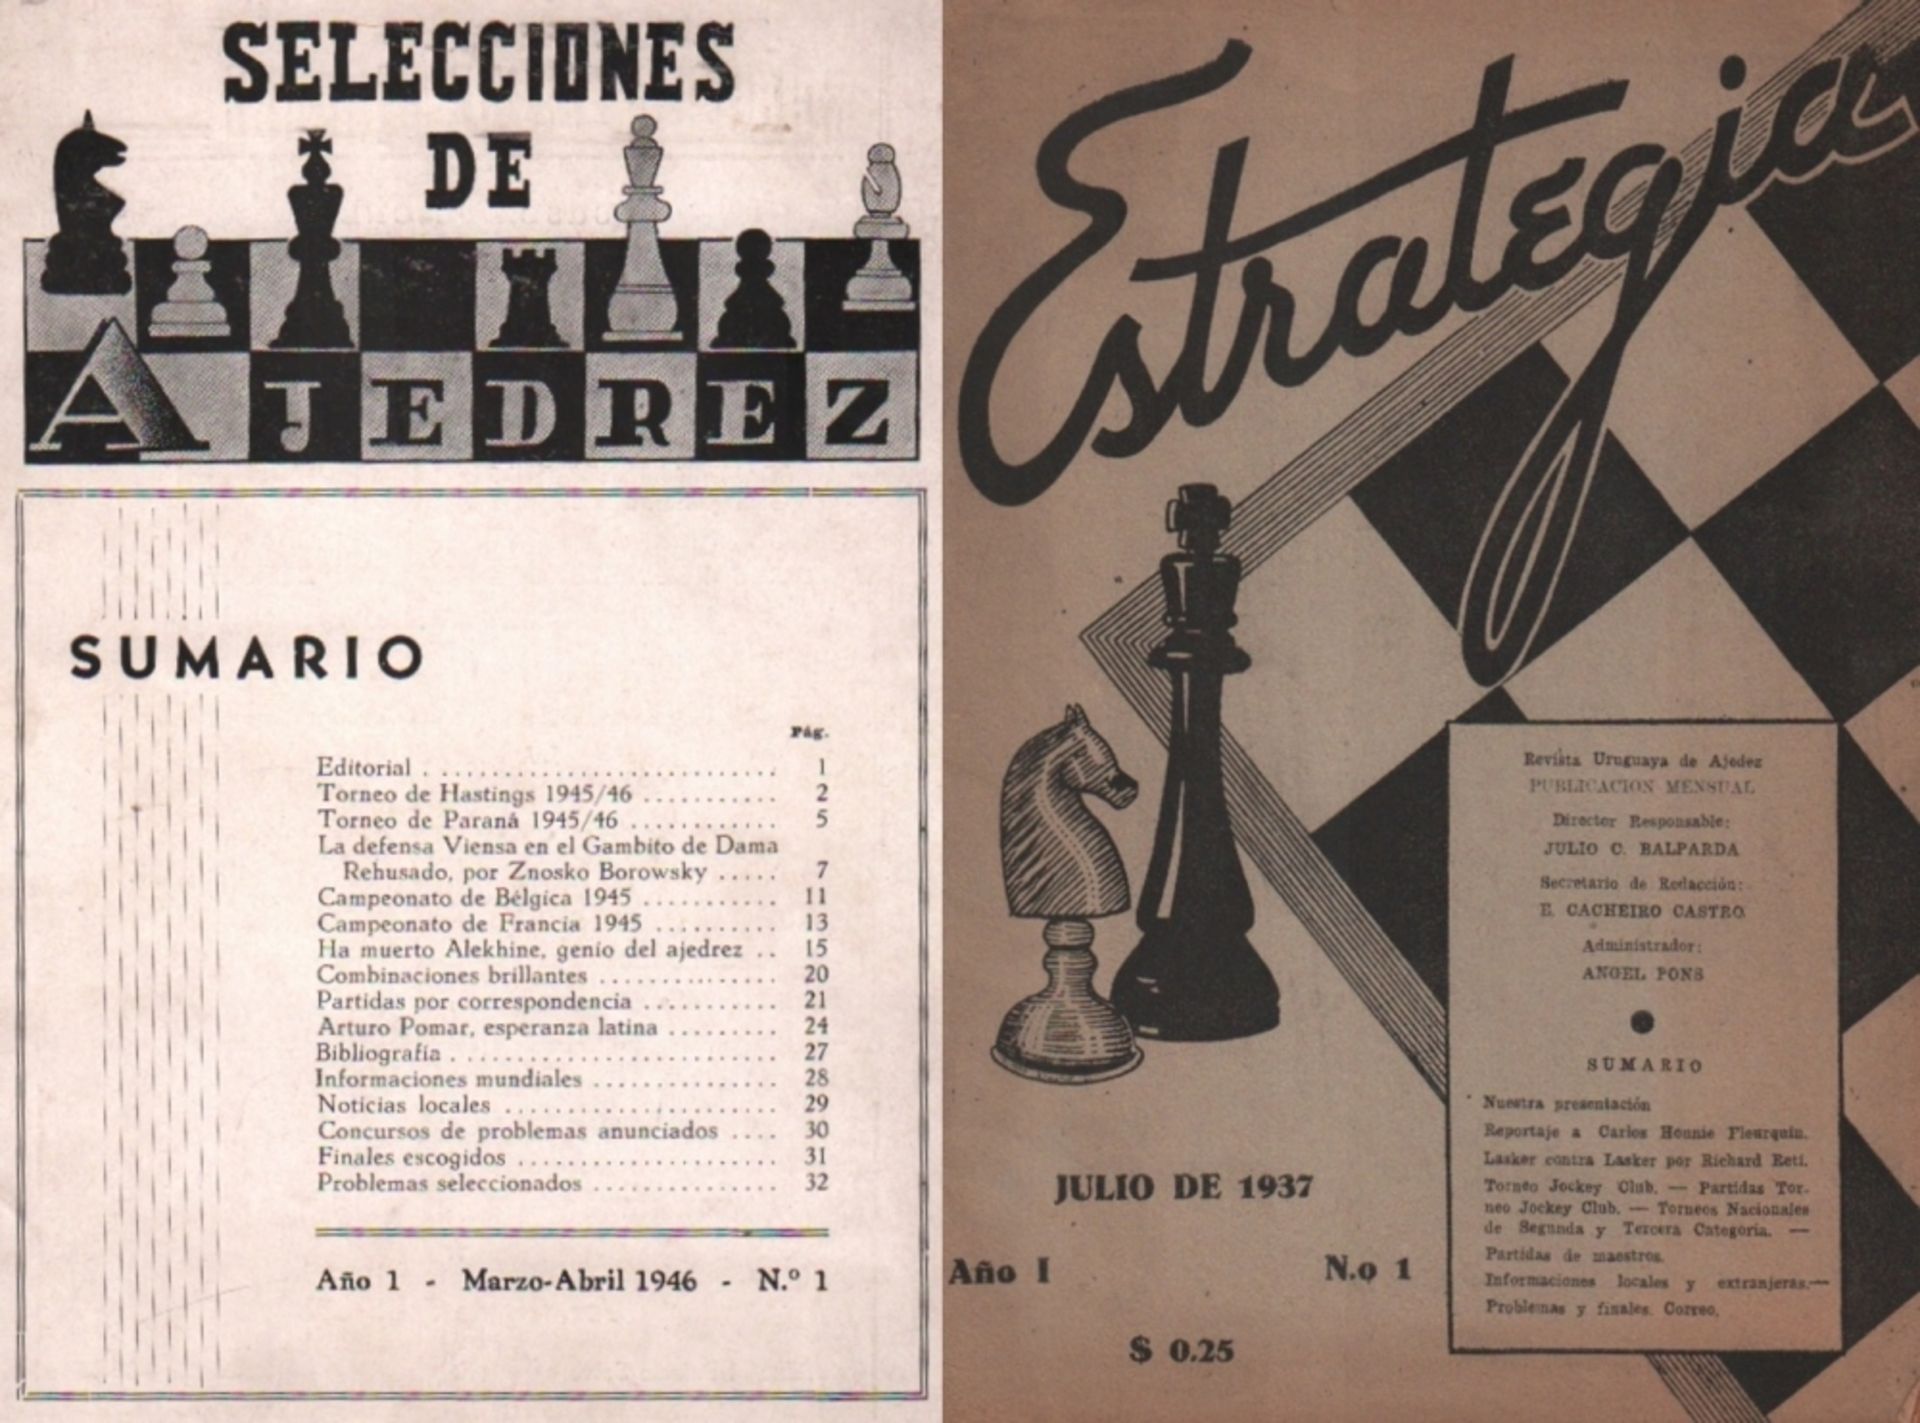 Estrategia. Revista Uruguaya de Ajedrez. Director: Julio C. Balparda. 5 Hefte. (Alles Erschienene)